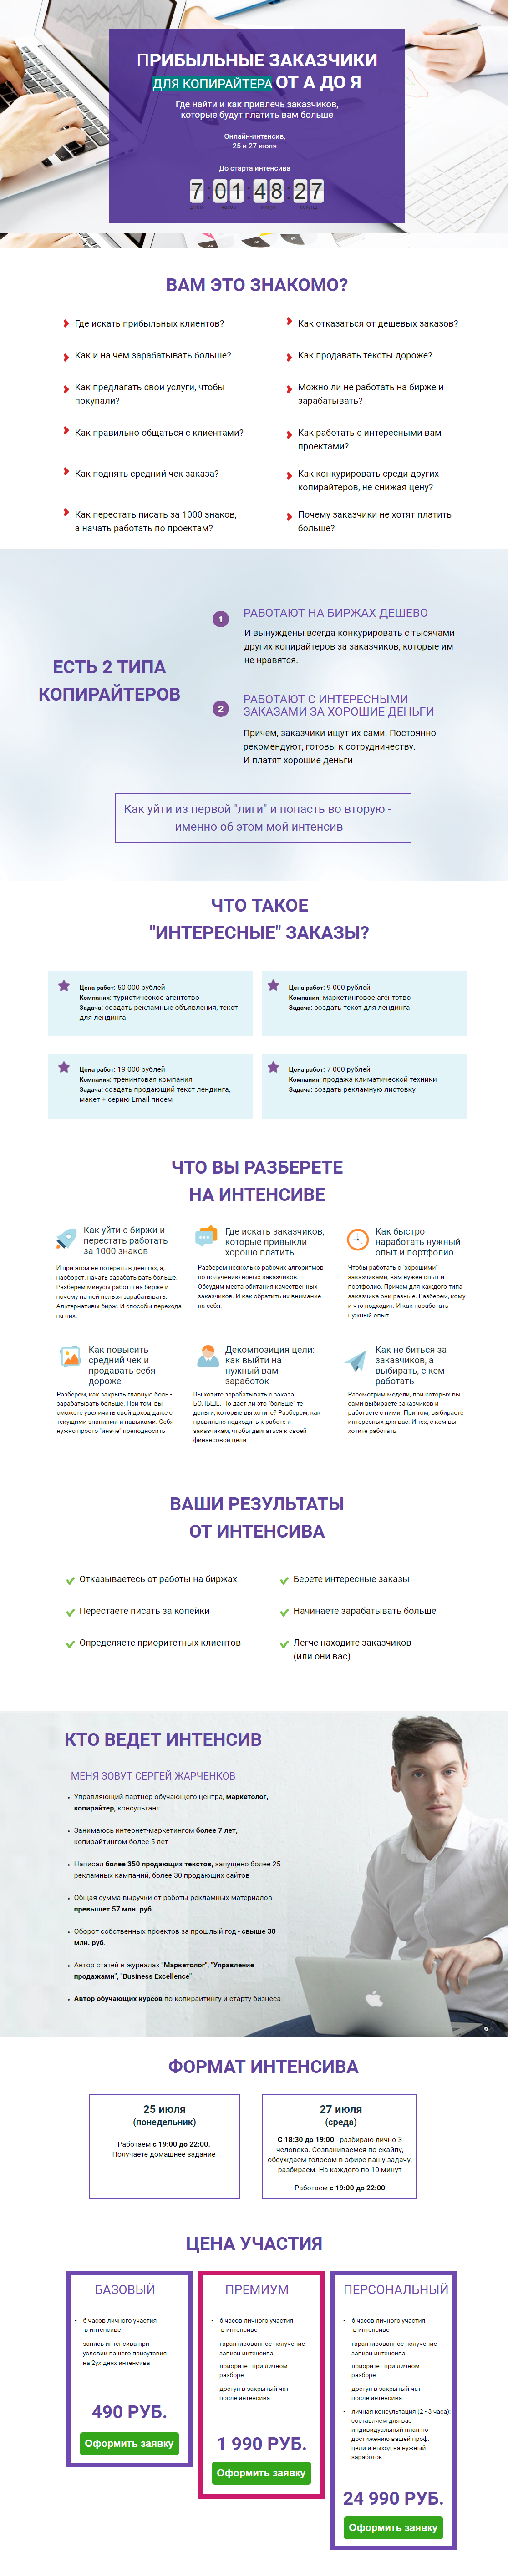 screenshot-www-copyschool-ru-2016-07-18-17-11-44-jpg.177615